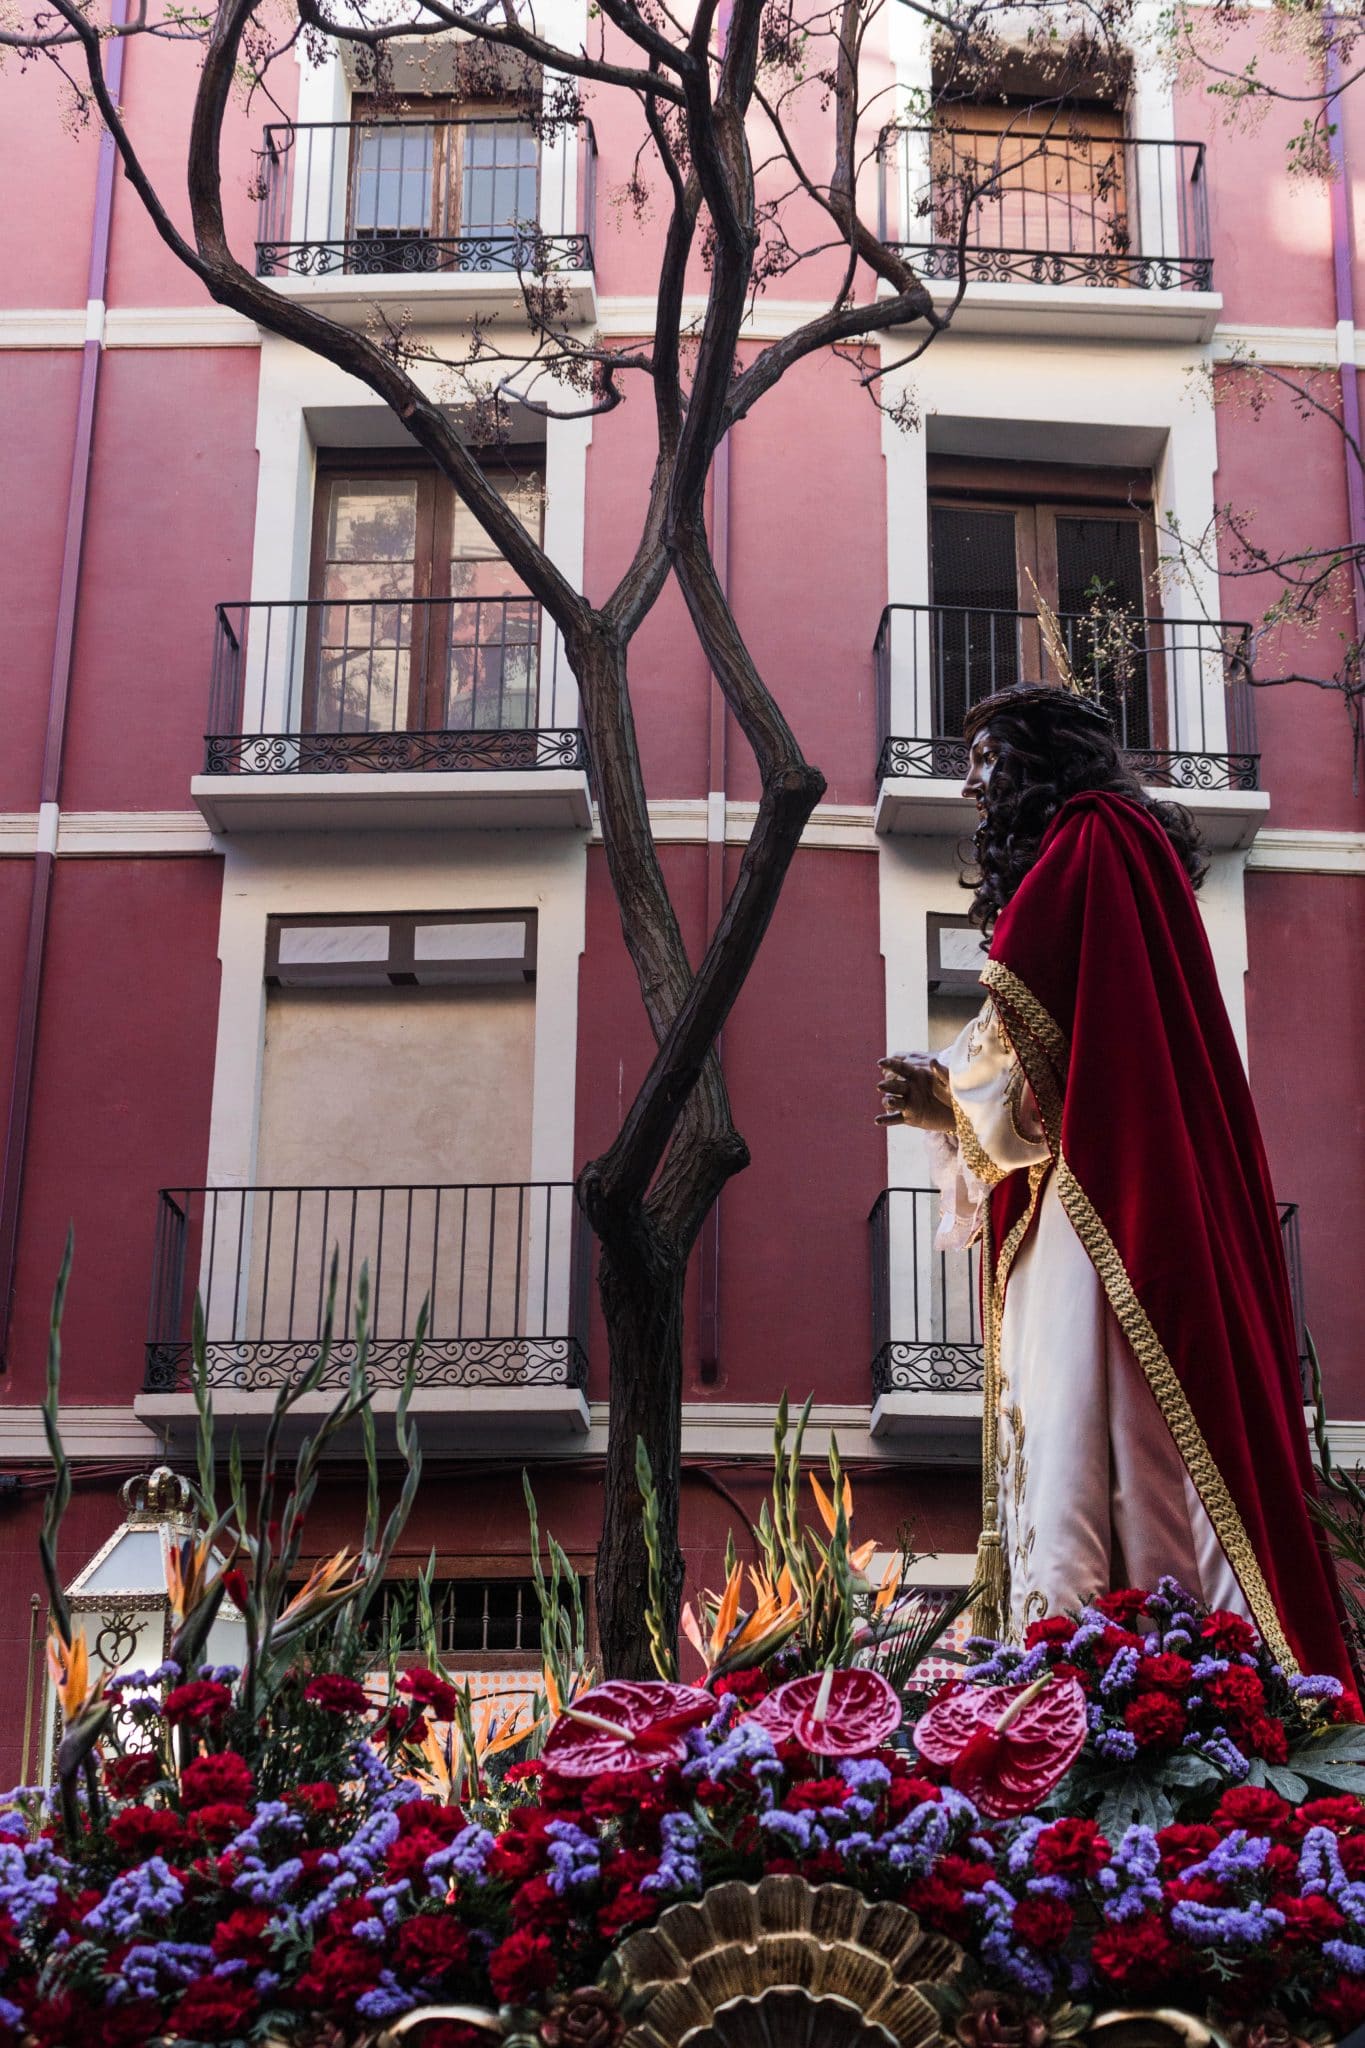 Semana Santa en Zaragoza - Via Crucis Humillación